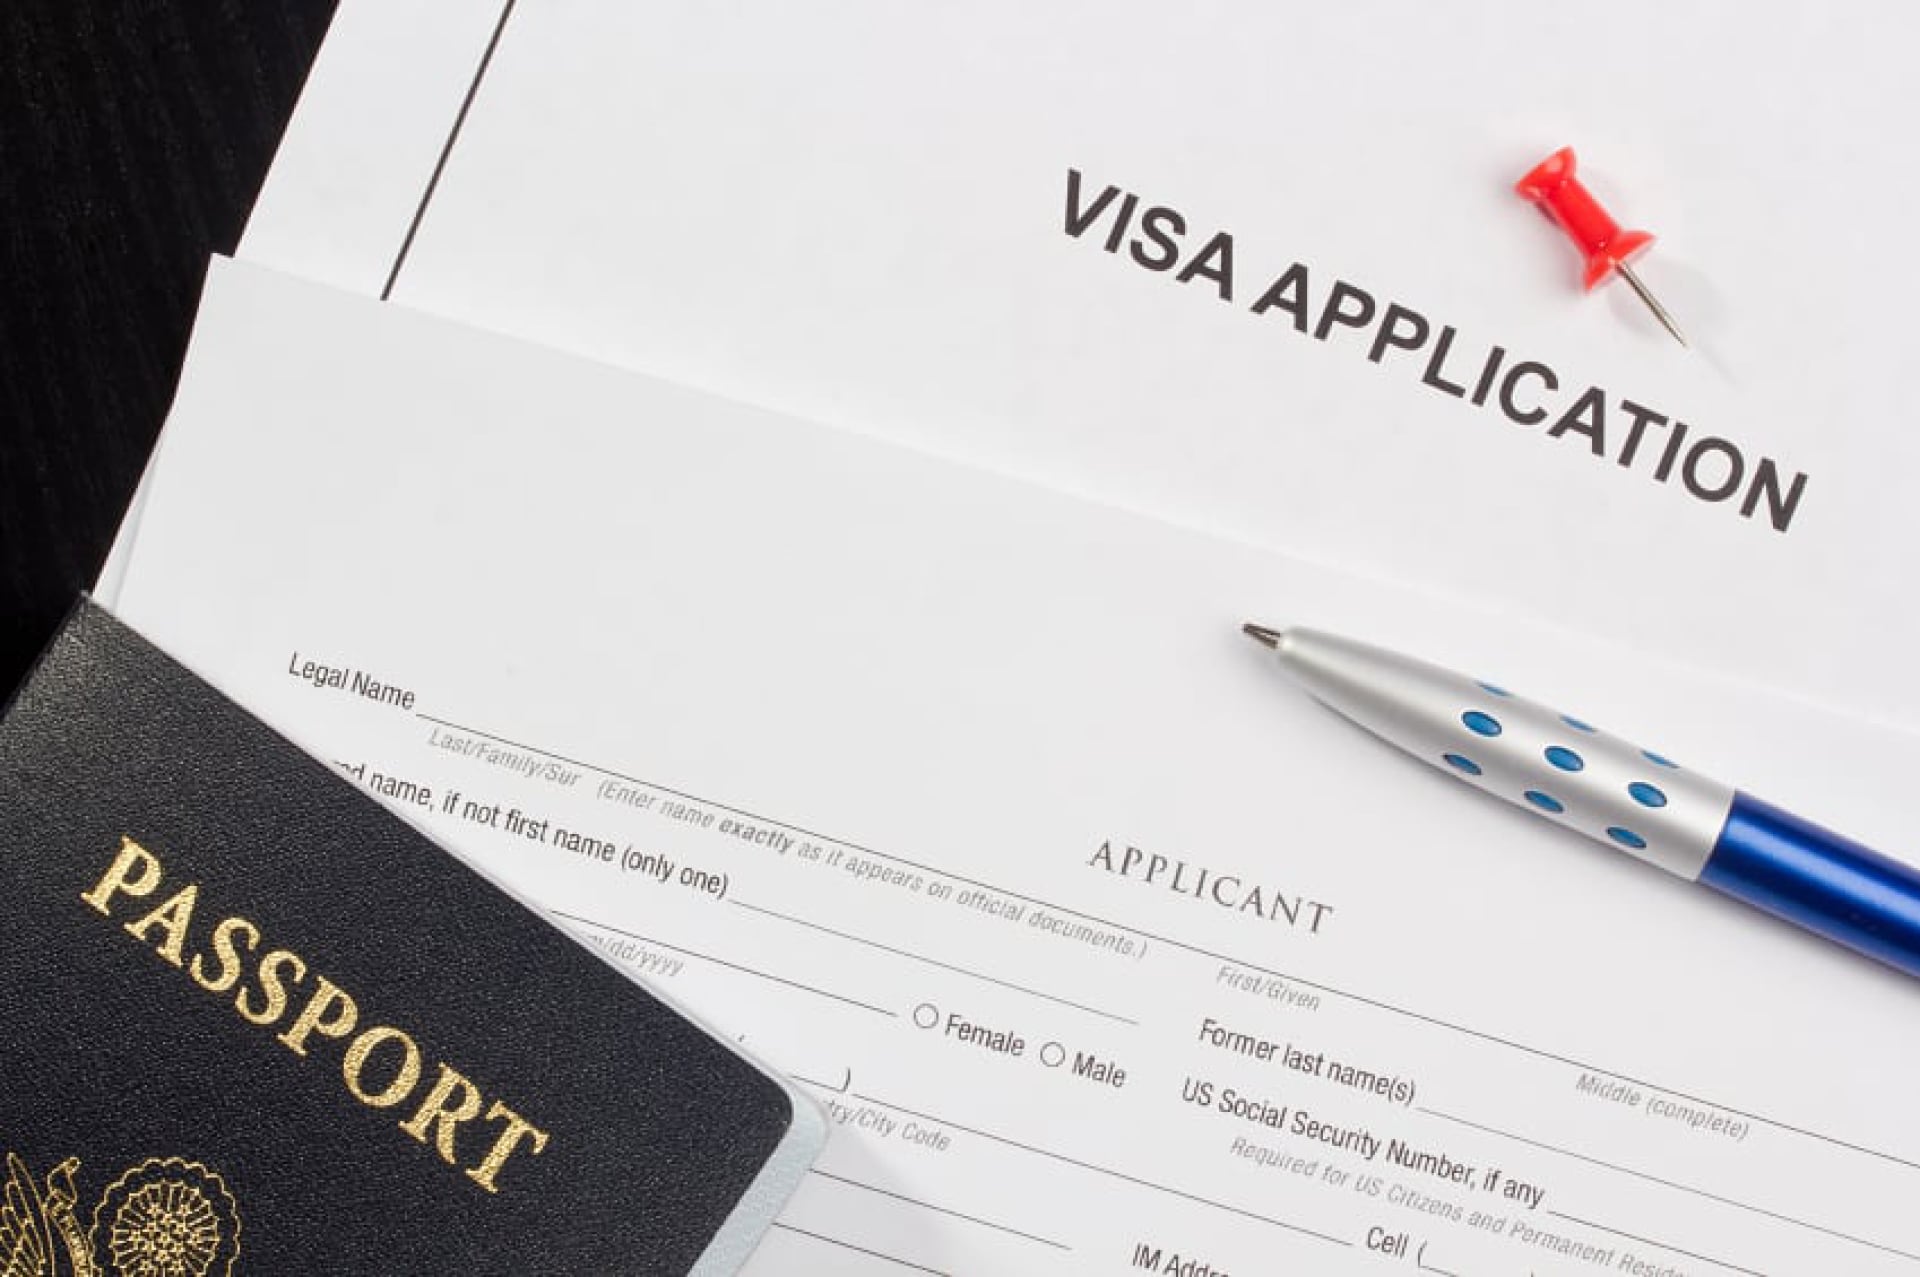 Visa Application process